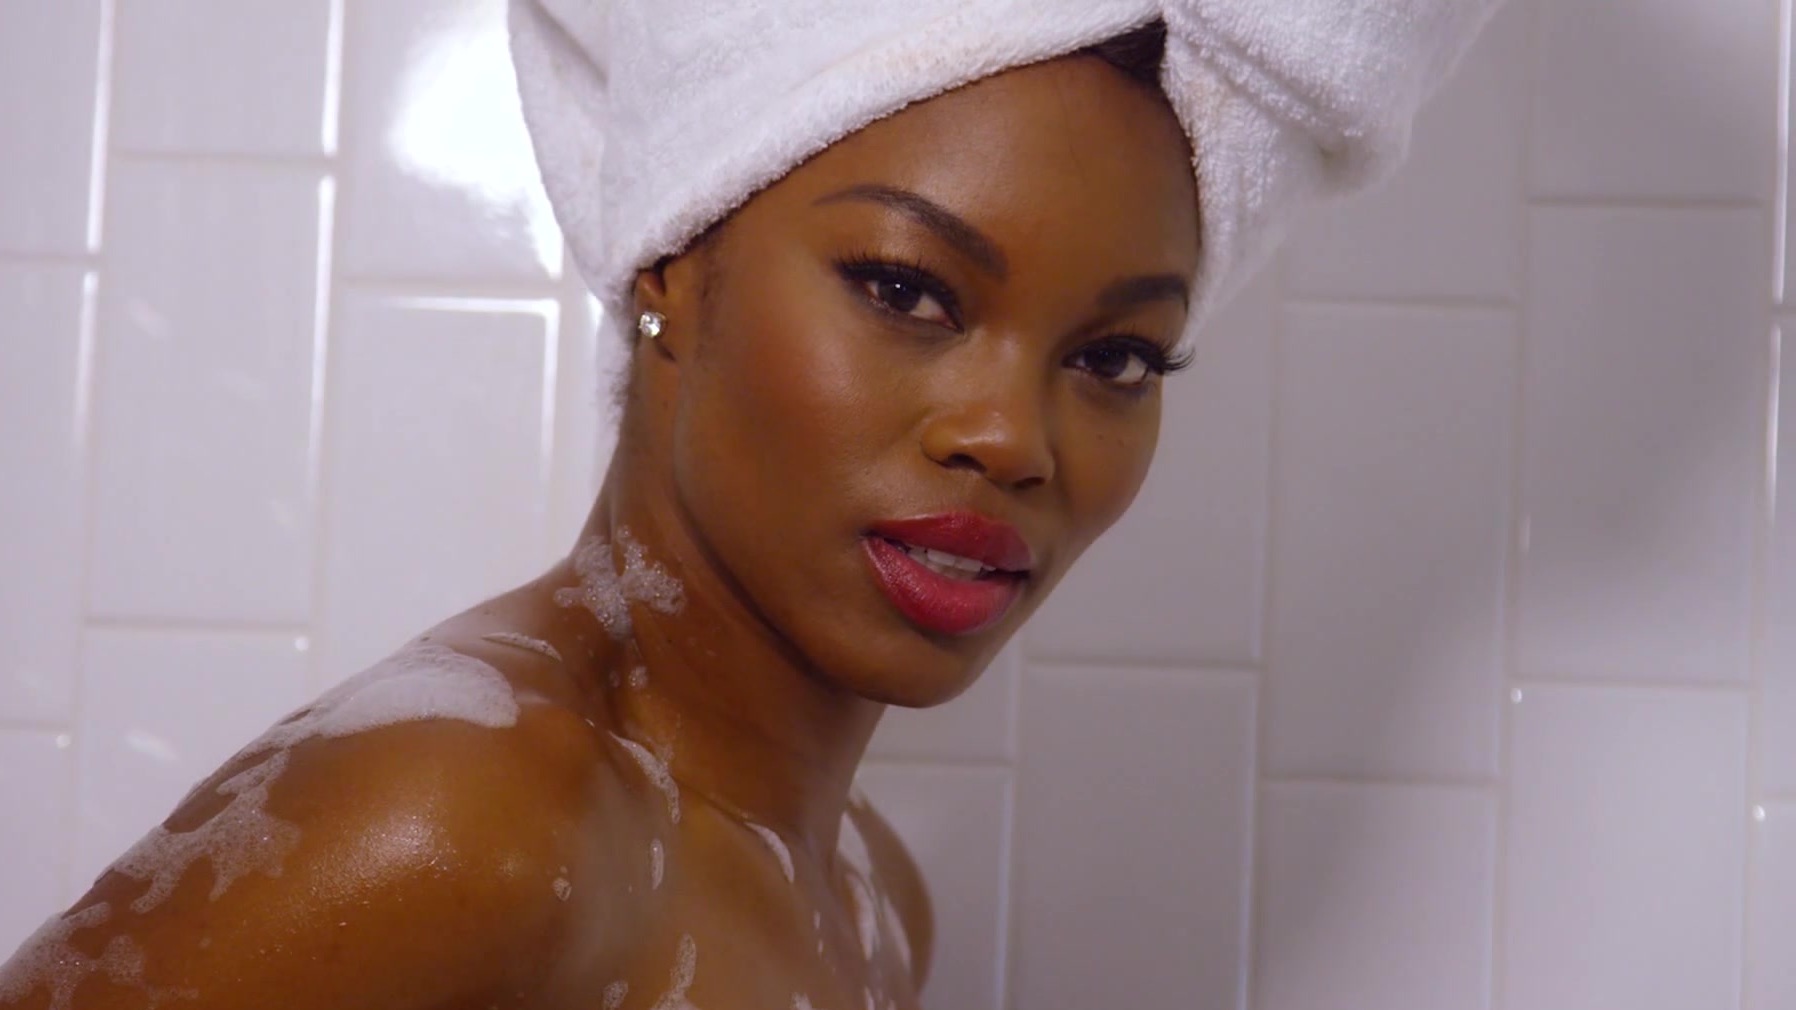 Hot Ebony Solo Nudes - Gorgeous ebony superb nude solo posing scenes - XBabe video